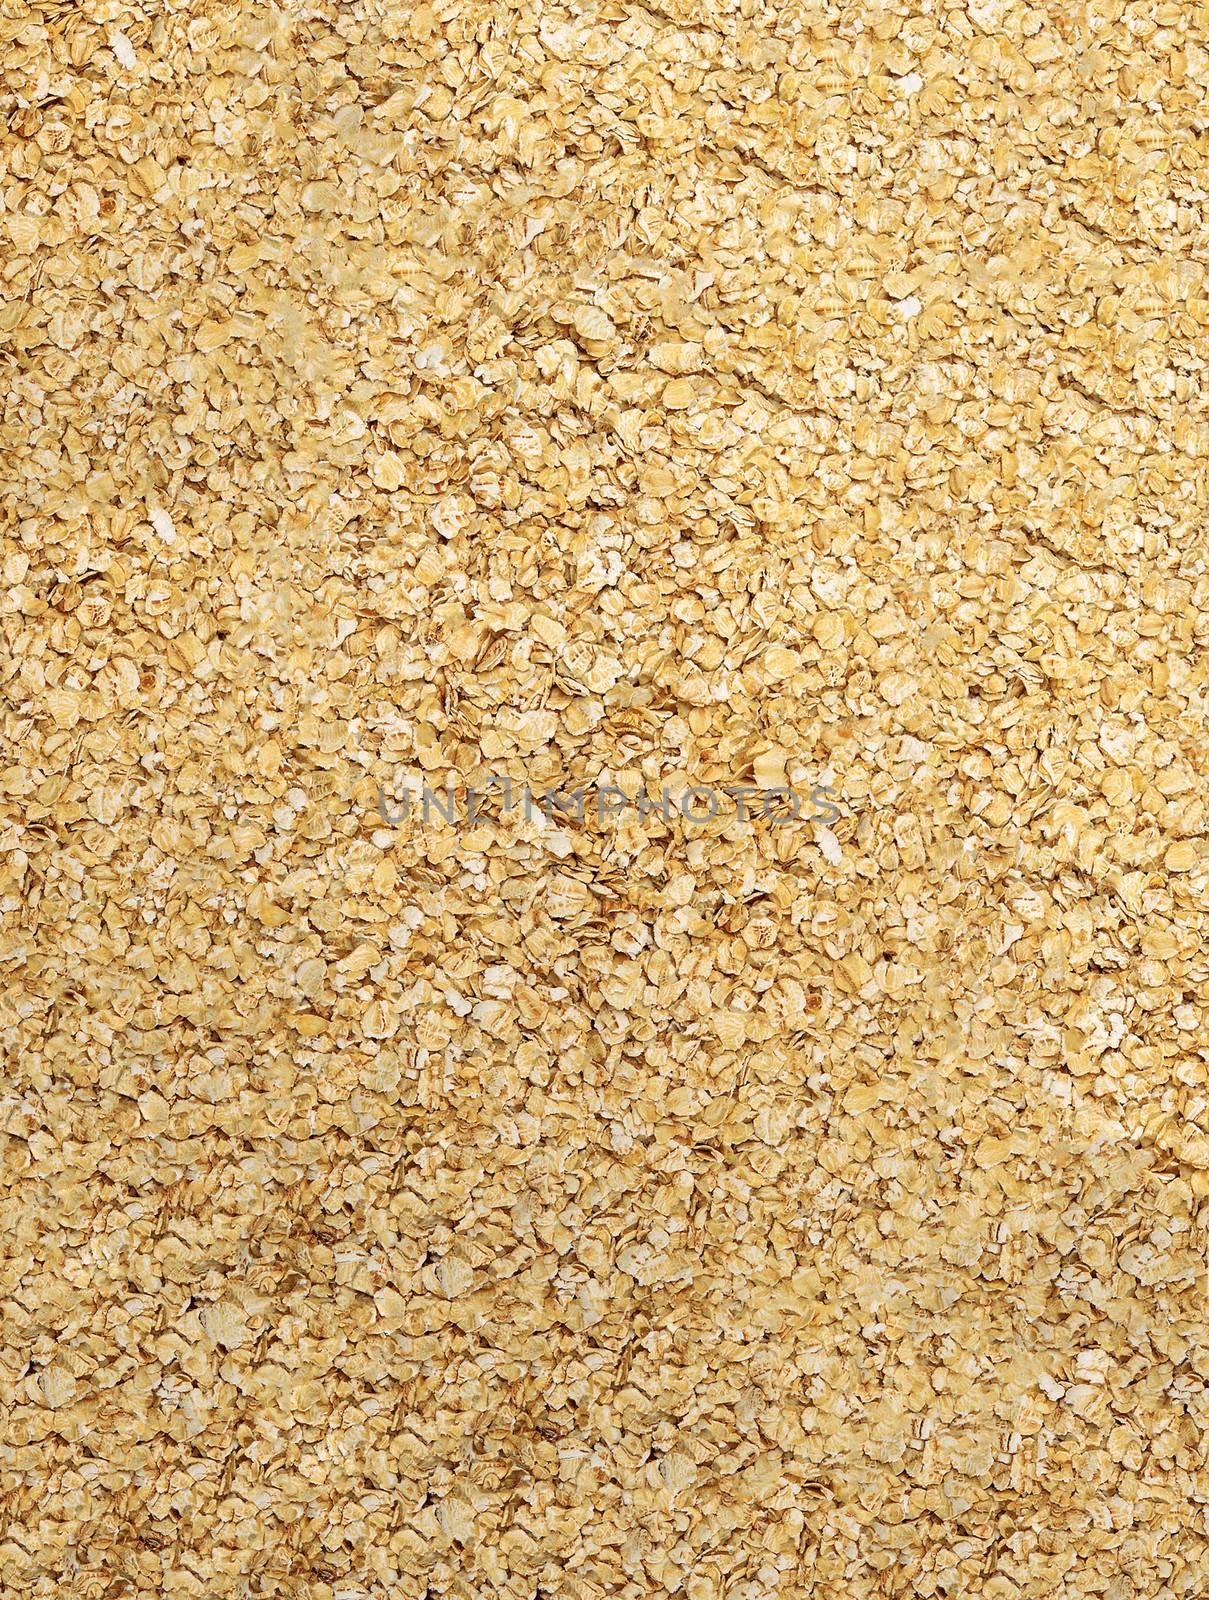 fresh whole grain oats background.